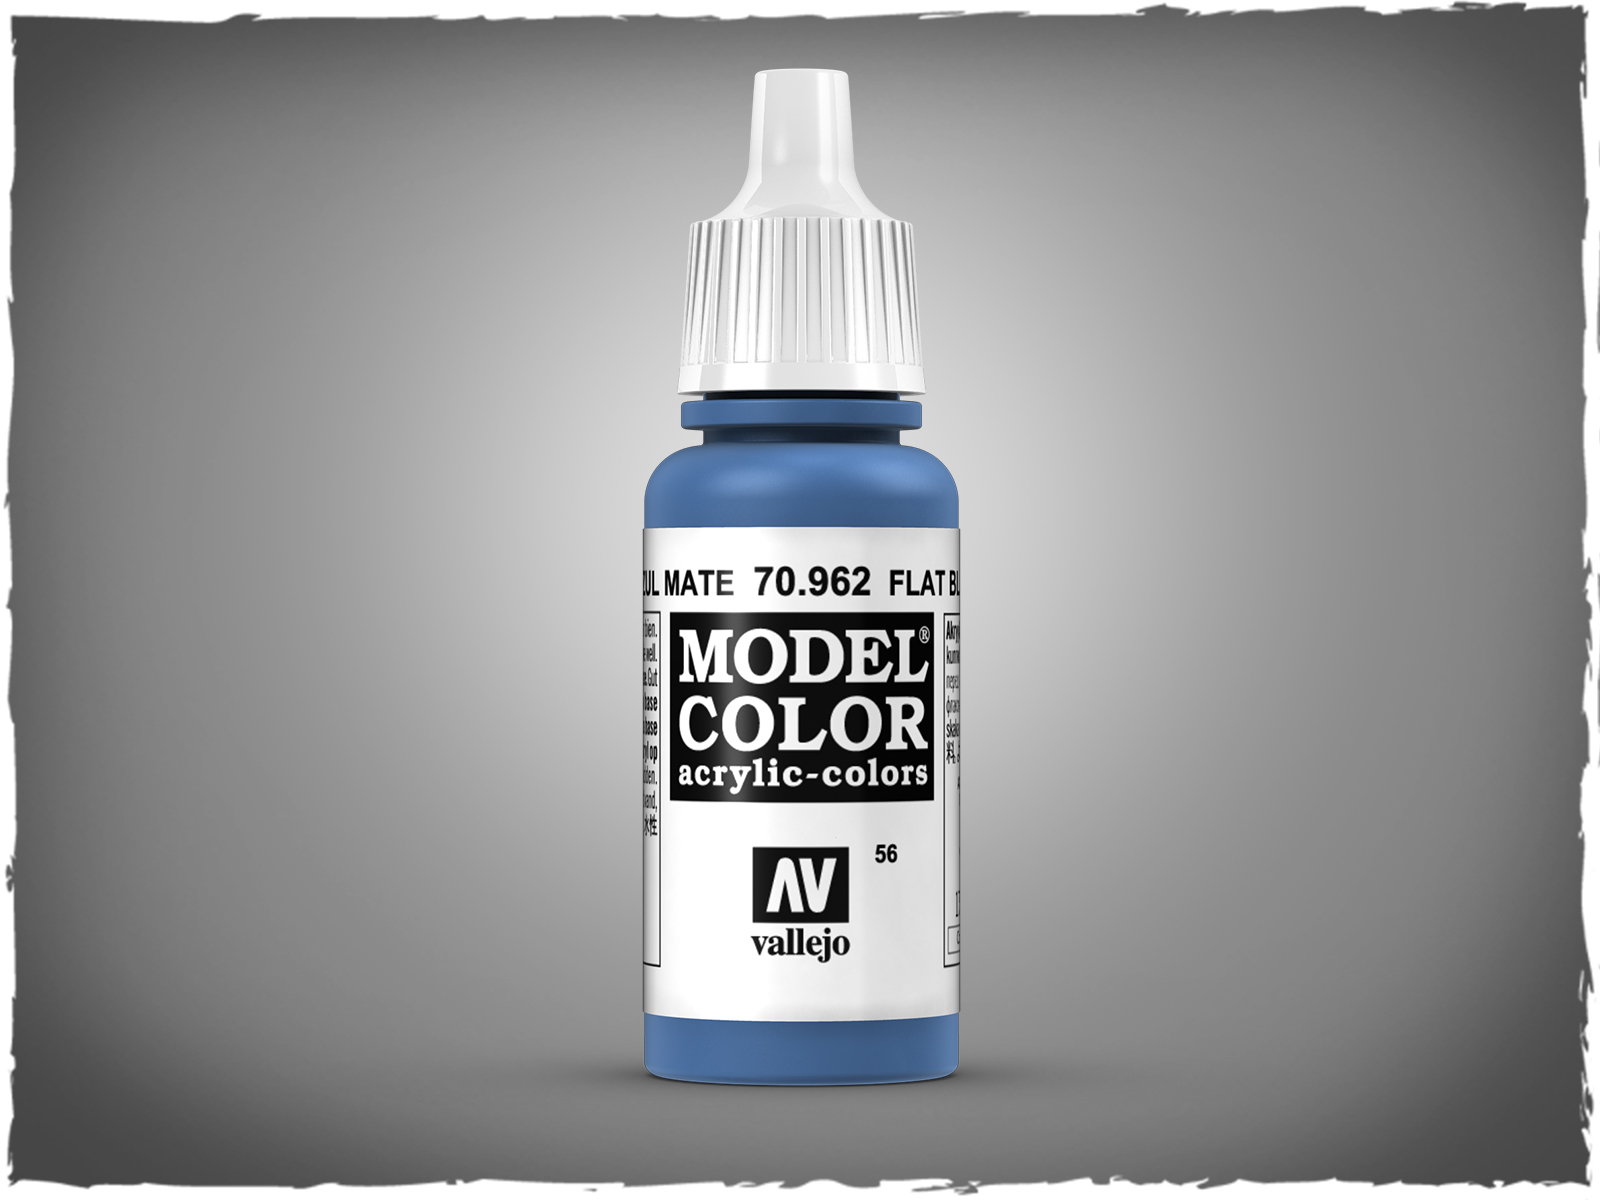 Vallejo Model Color (066) 70.844 Deep Sky Blue 17ml – Burbank's House of  Hobbies